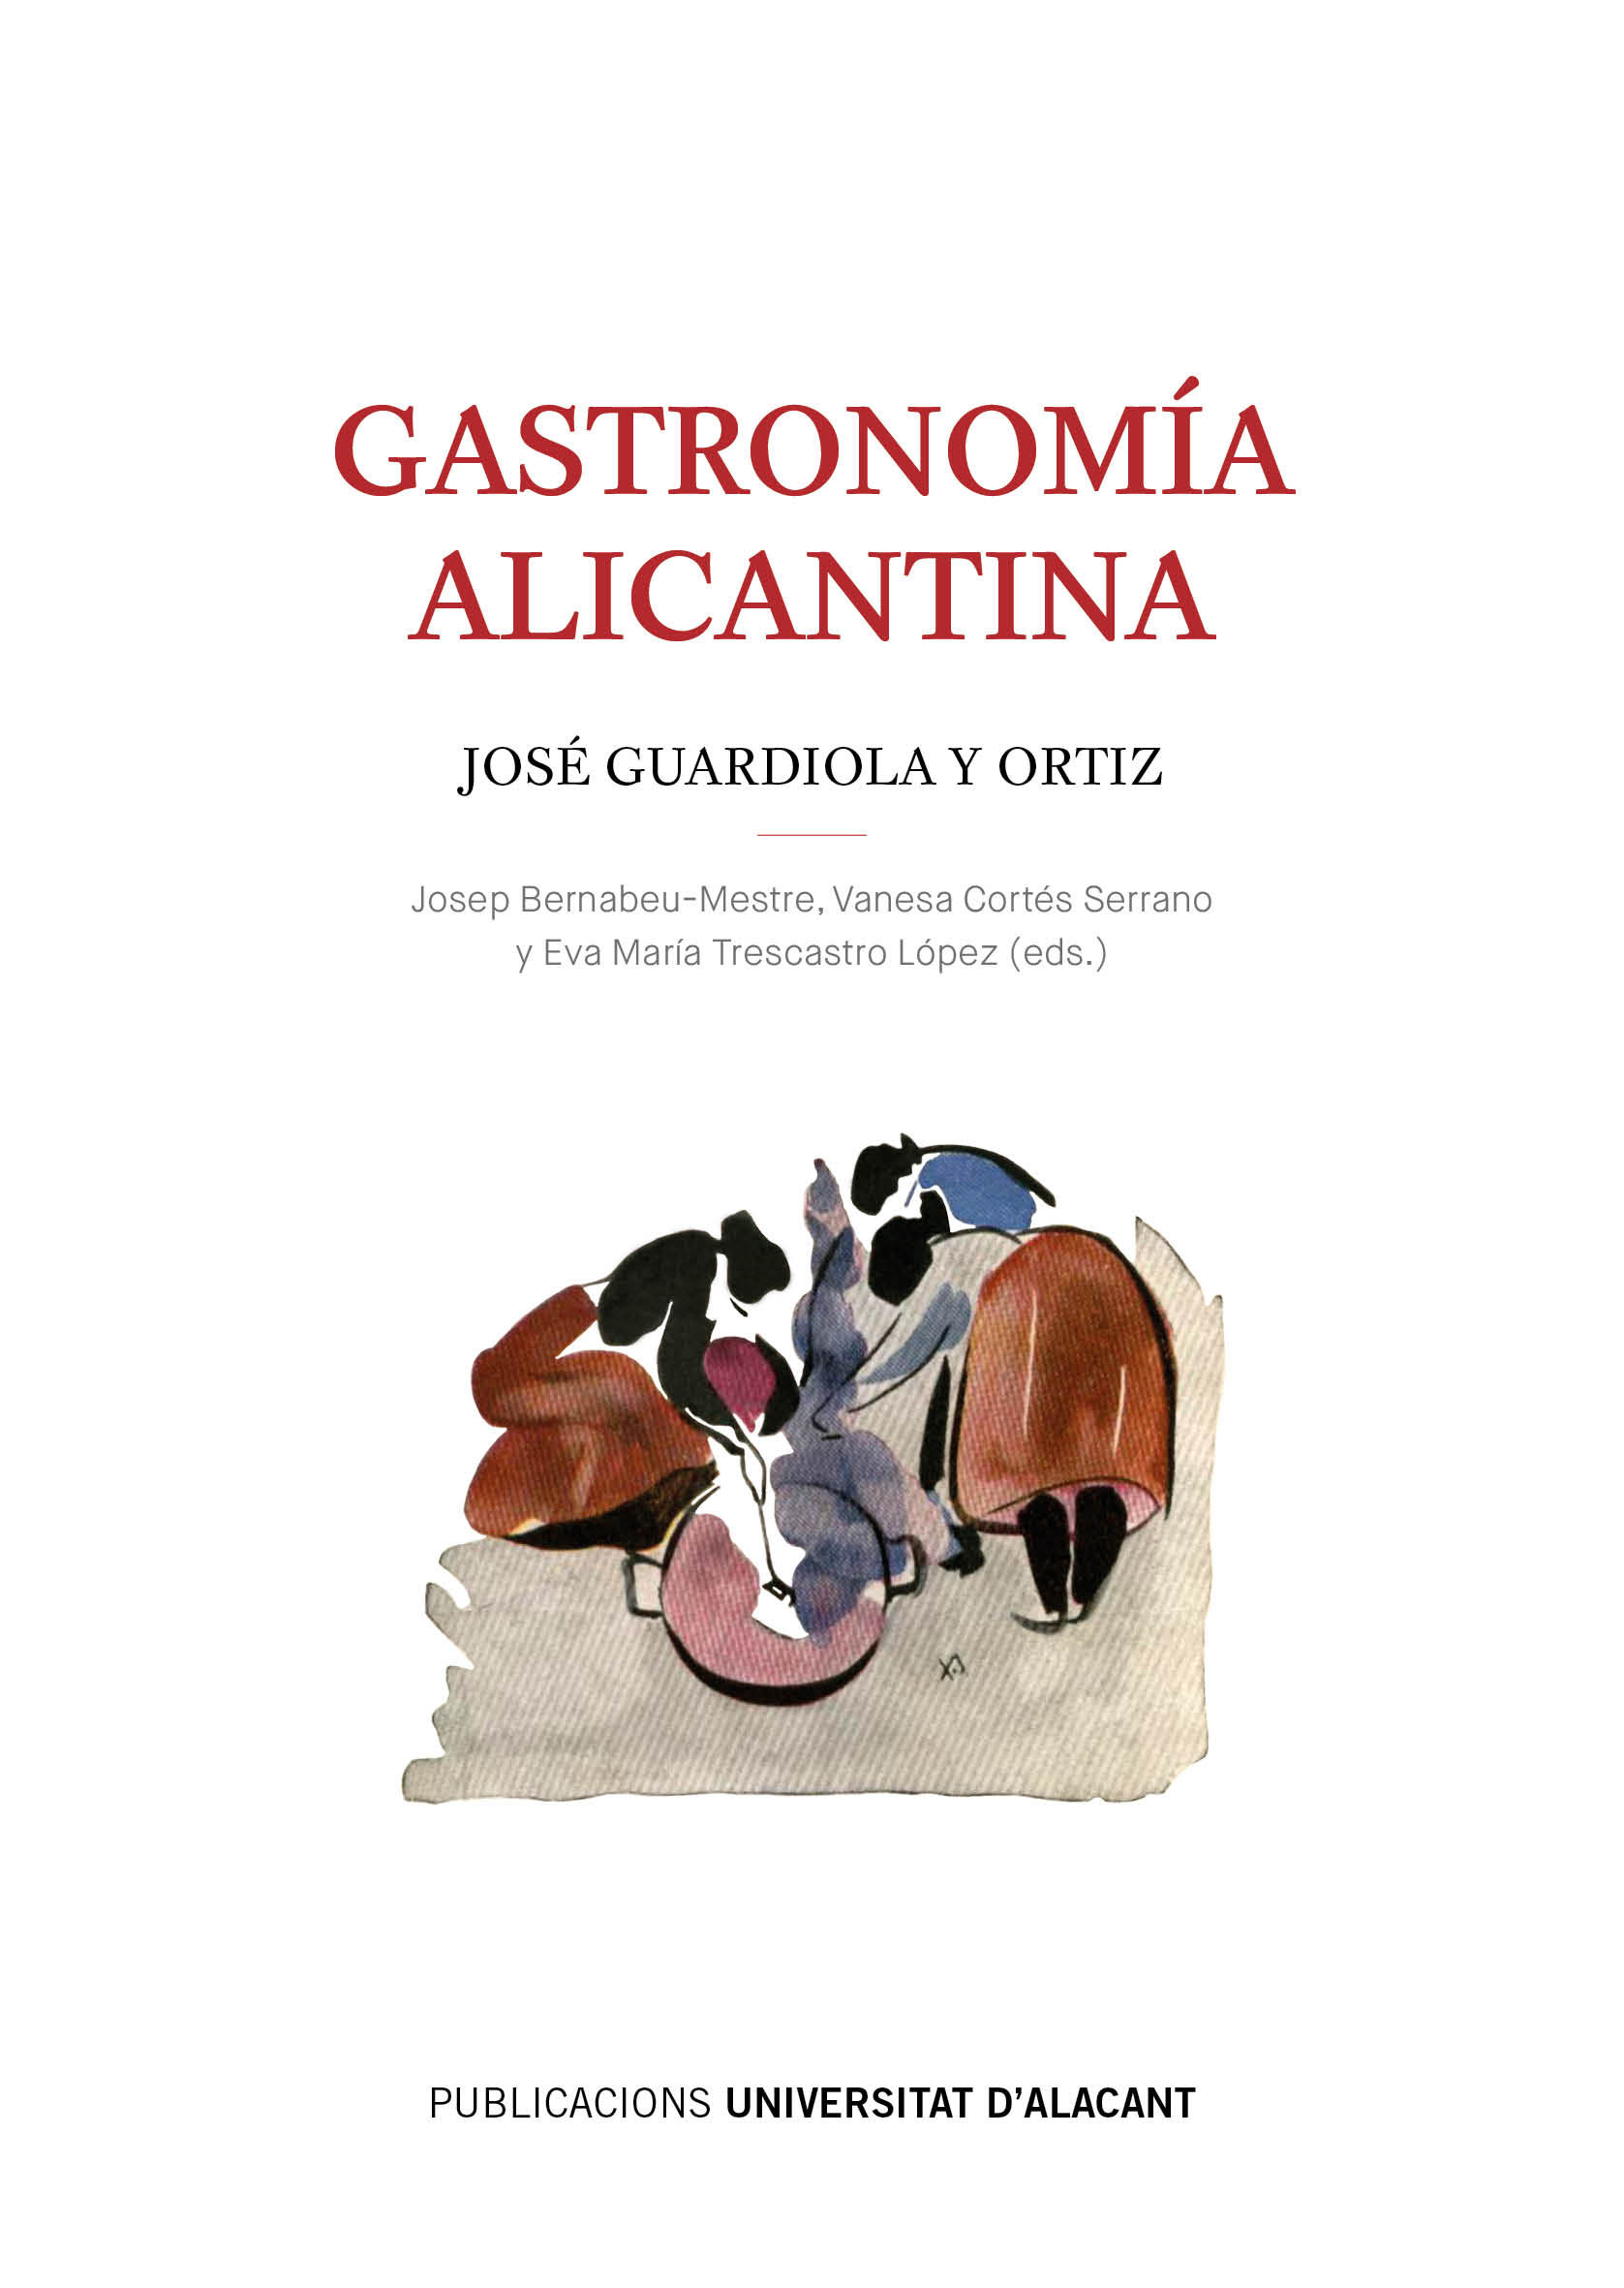 Cubierta Gastronomia alicantina.jpg